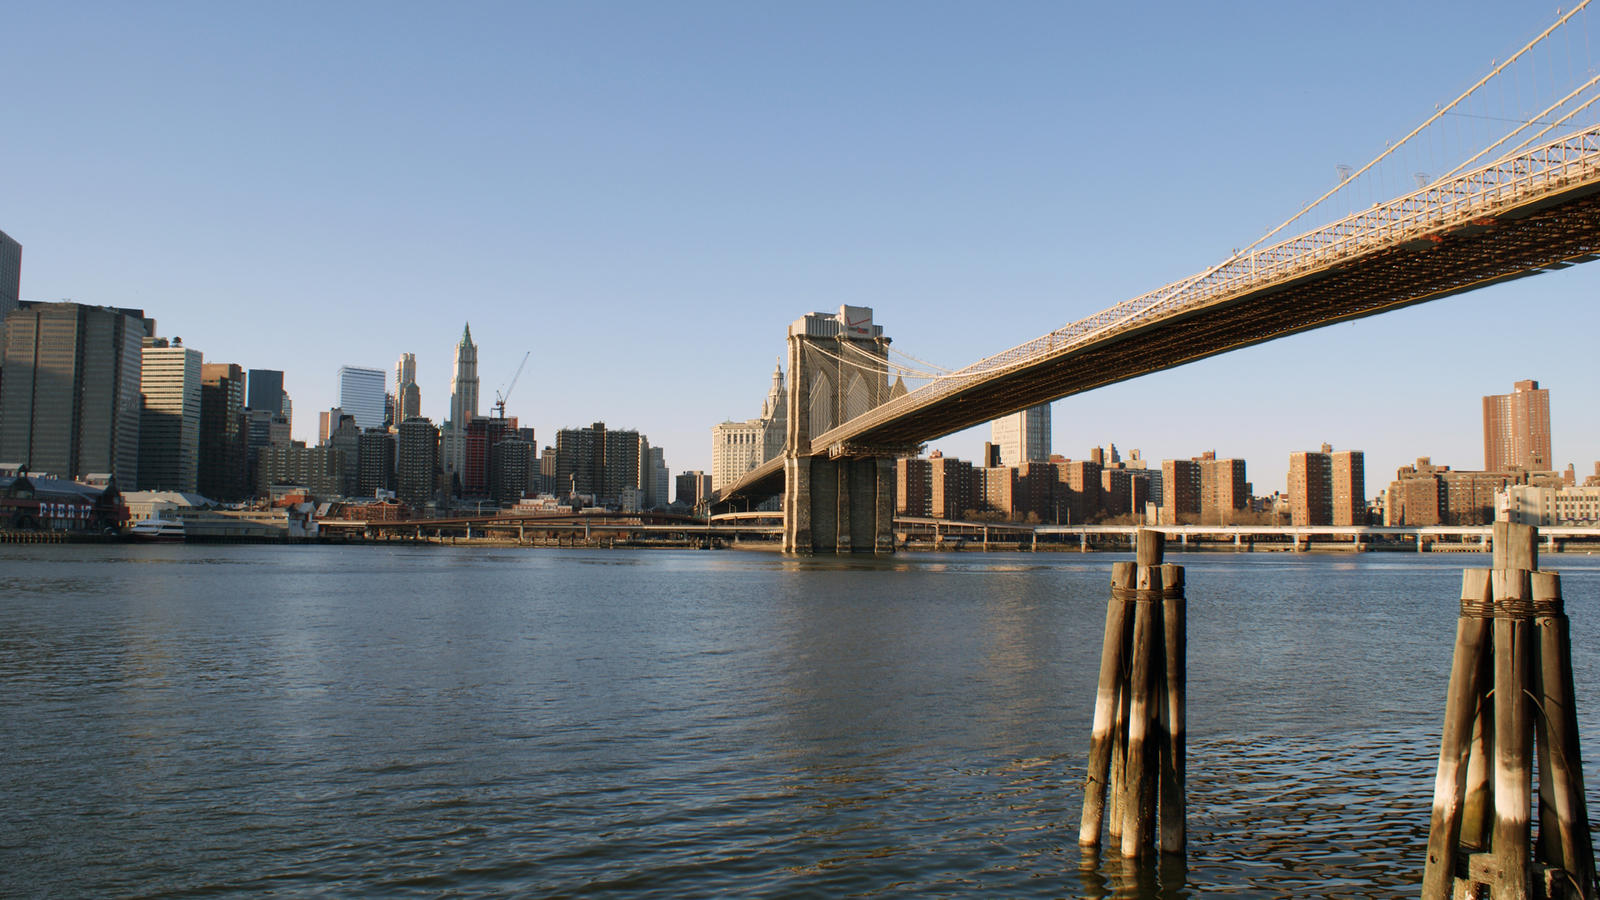 Brooklyn Bridge overview by Rikola on DeviantArt